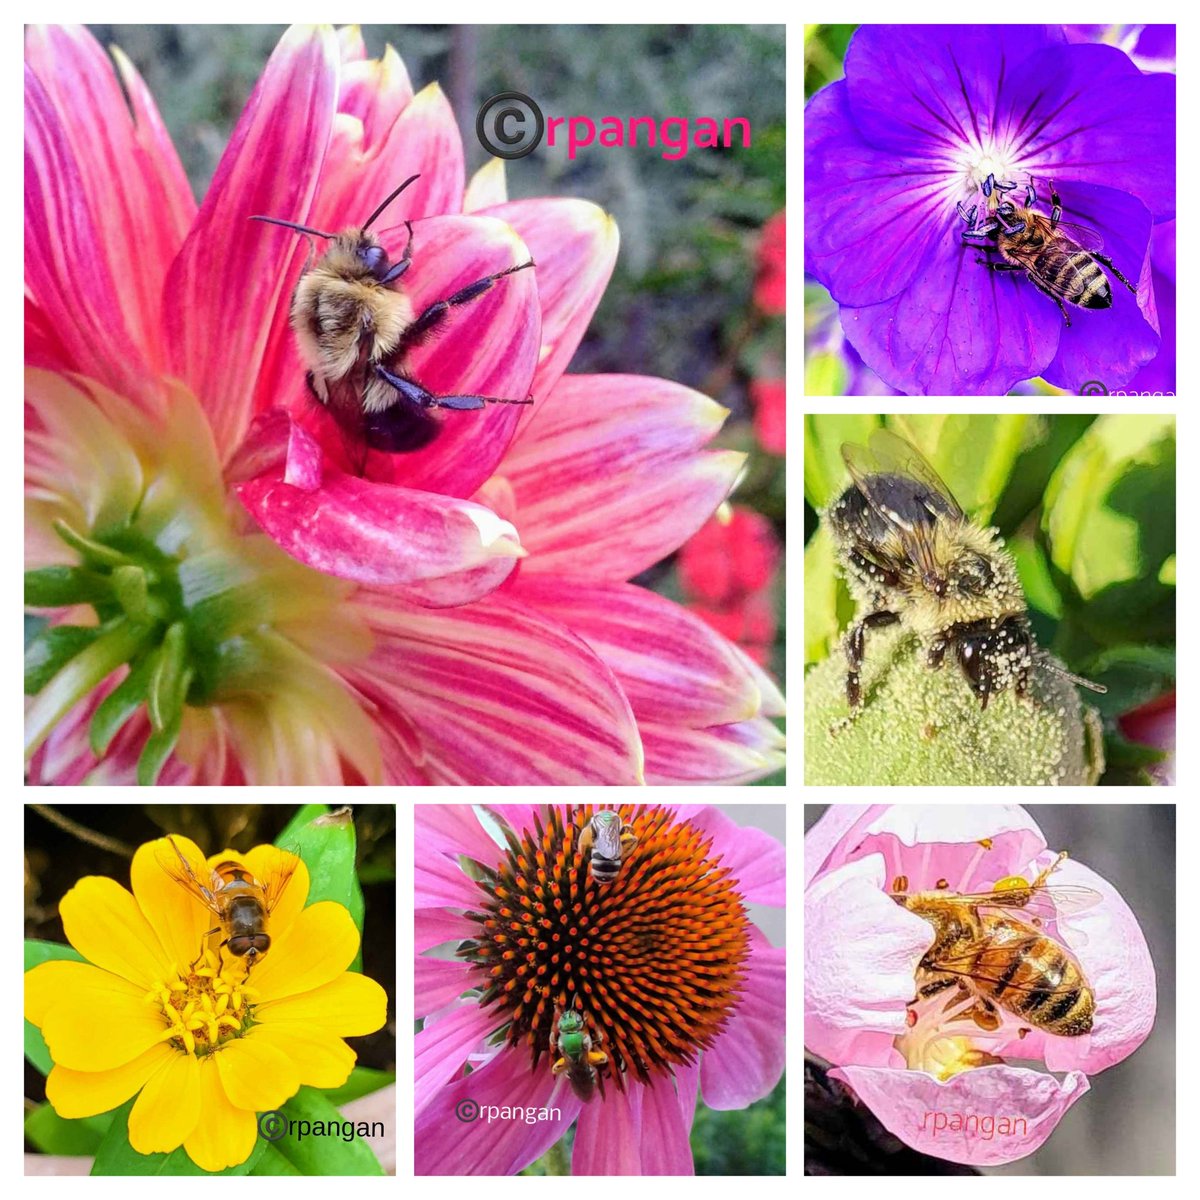 Happy #WorldBeeDay !!! #SaveTheBees
No Bees, No Life!  
#mygarden #twitternaturecommunity #bees #insects #pollinators #pollinatorsgardens #Gardeninglife